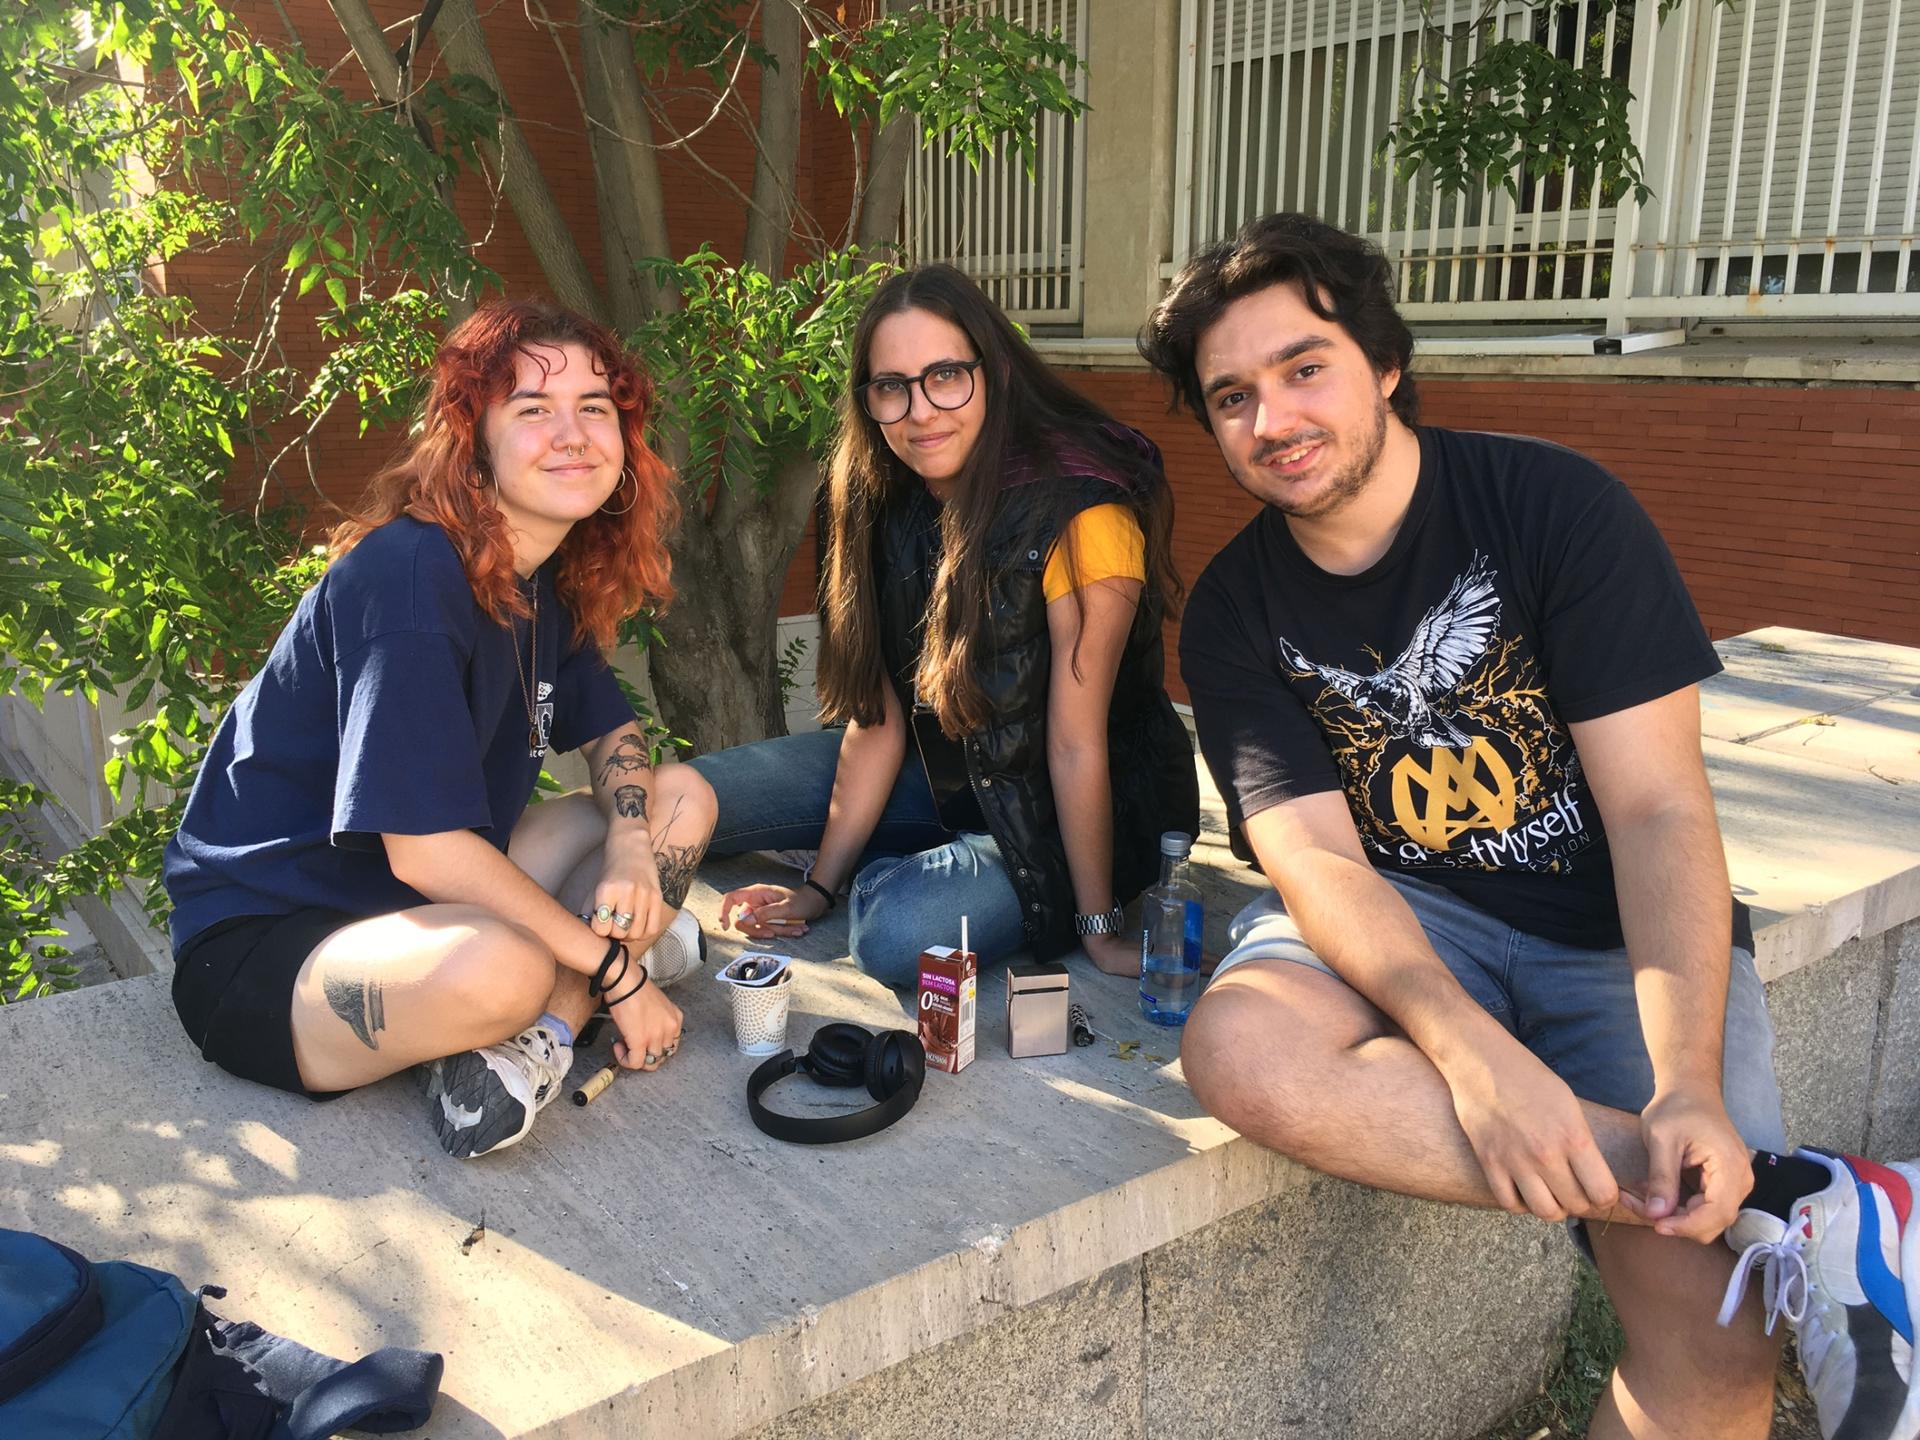 Students of Art History at Complutense University, from left to right: Elena Ontañón, Irene Menchero, and Rafael Rentero.